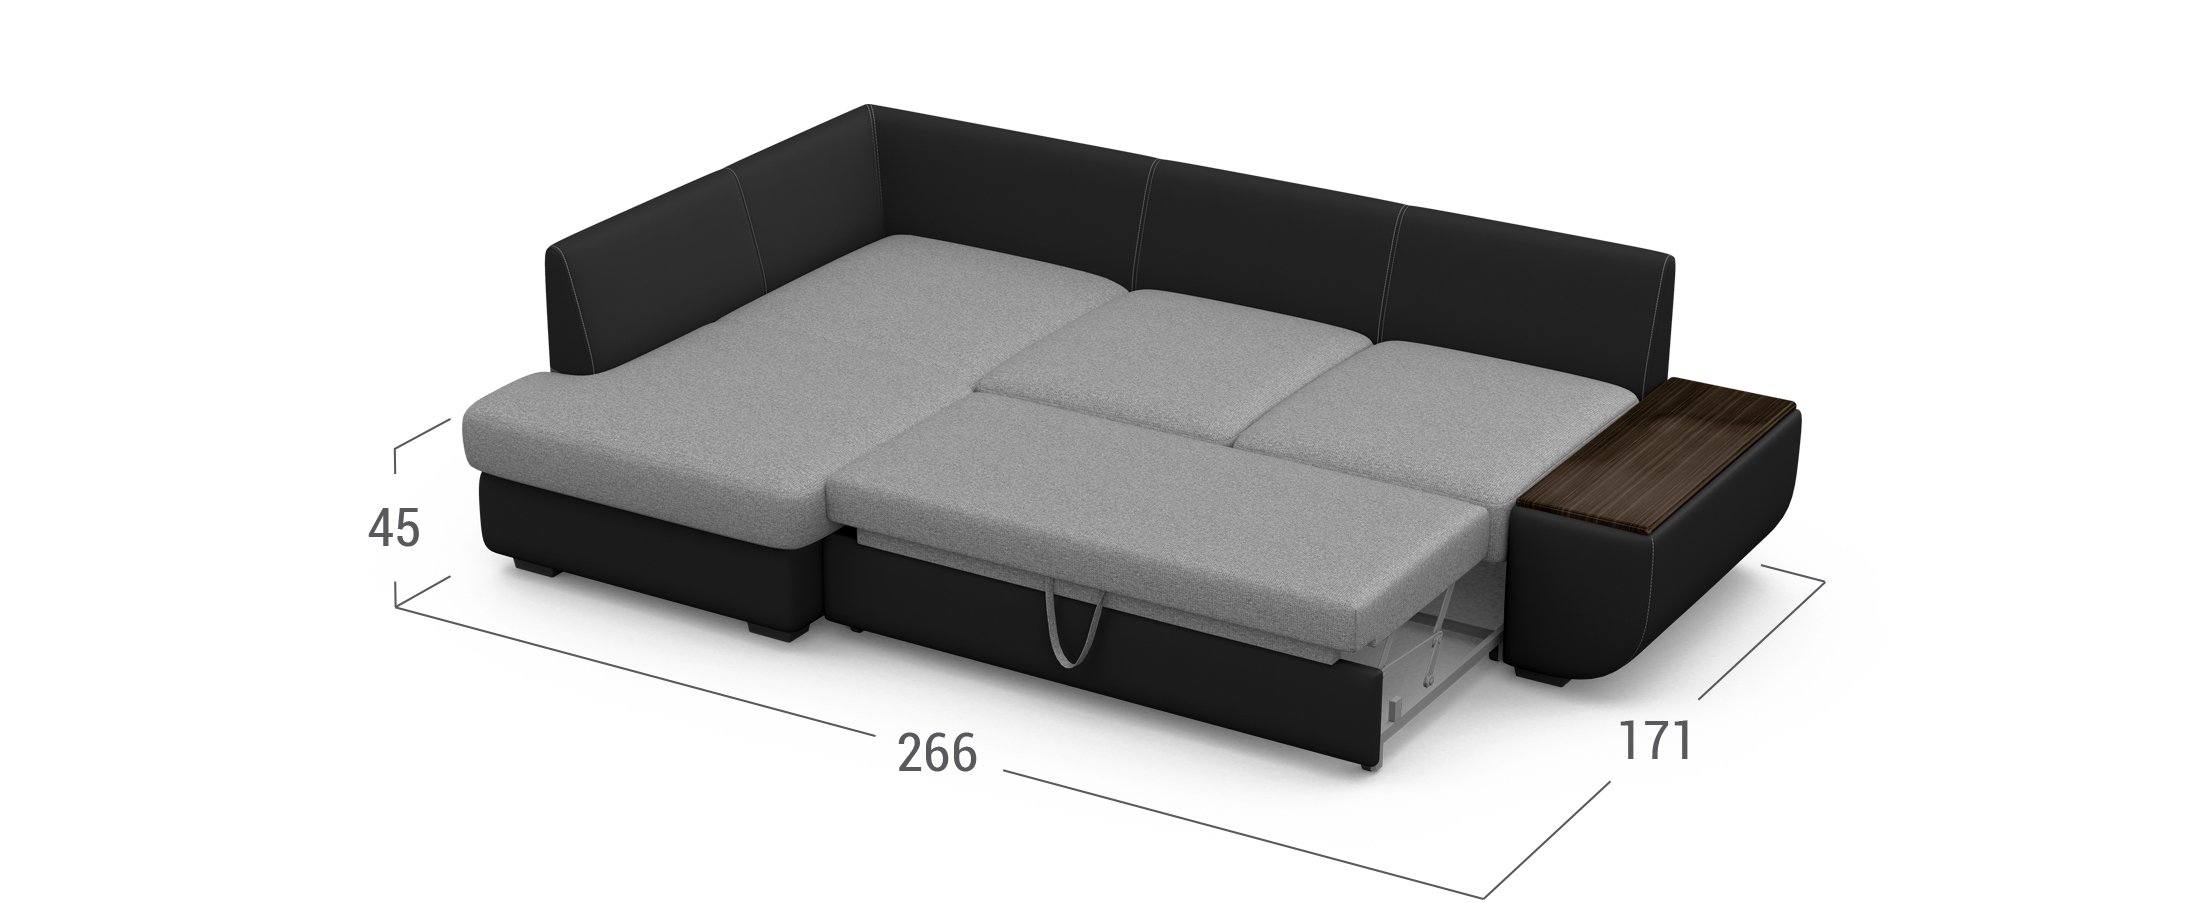 Угловой диван нью йорк характеристики